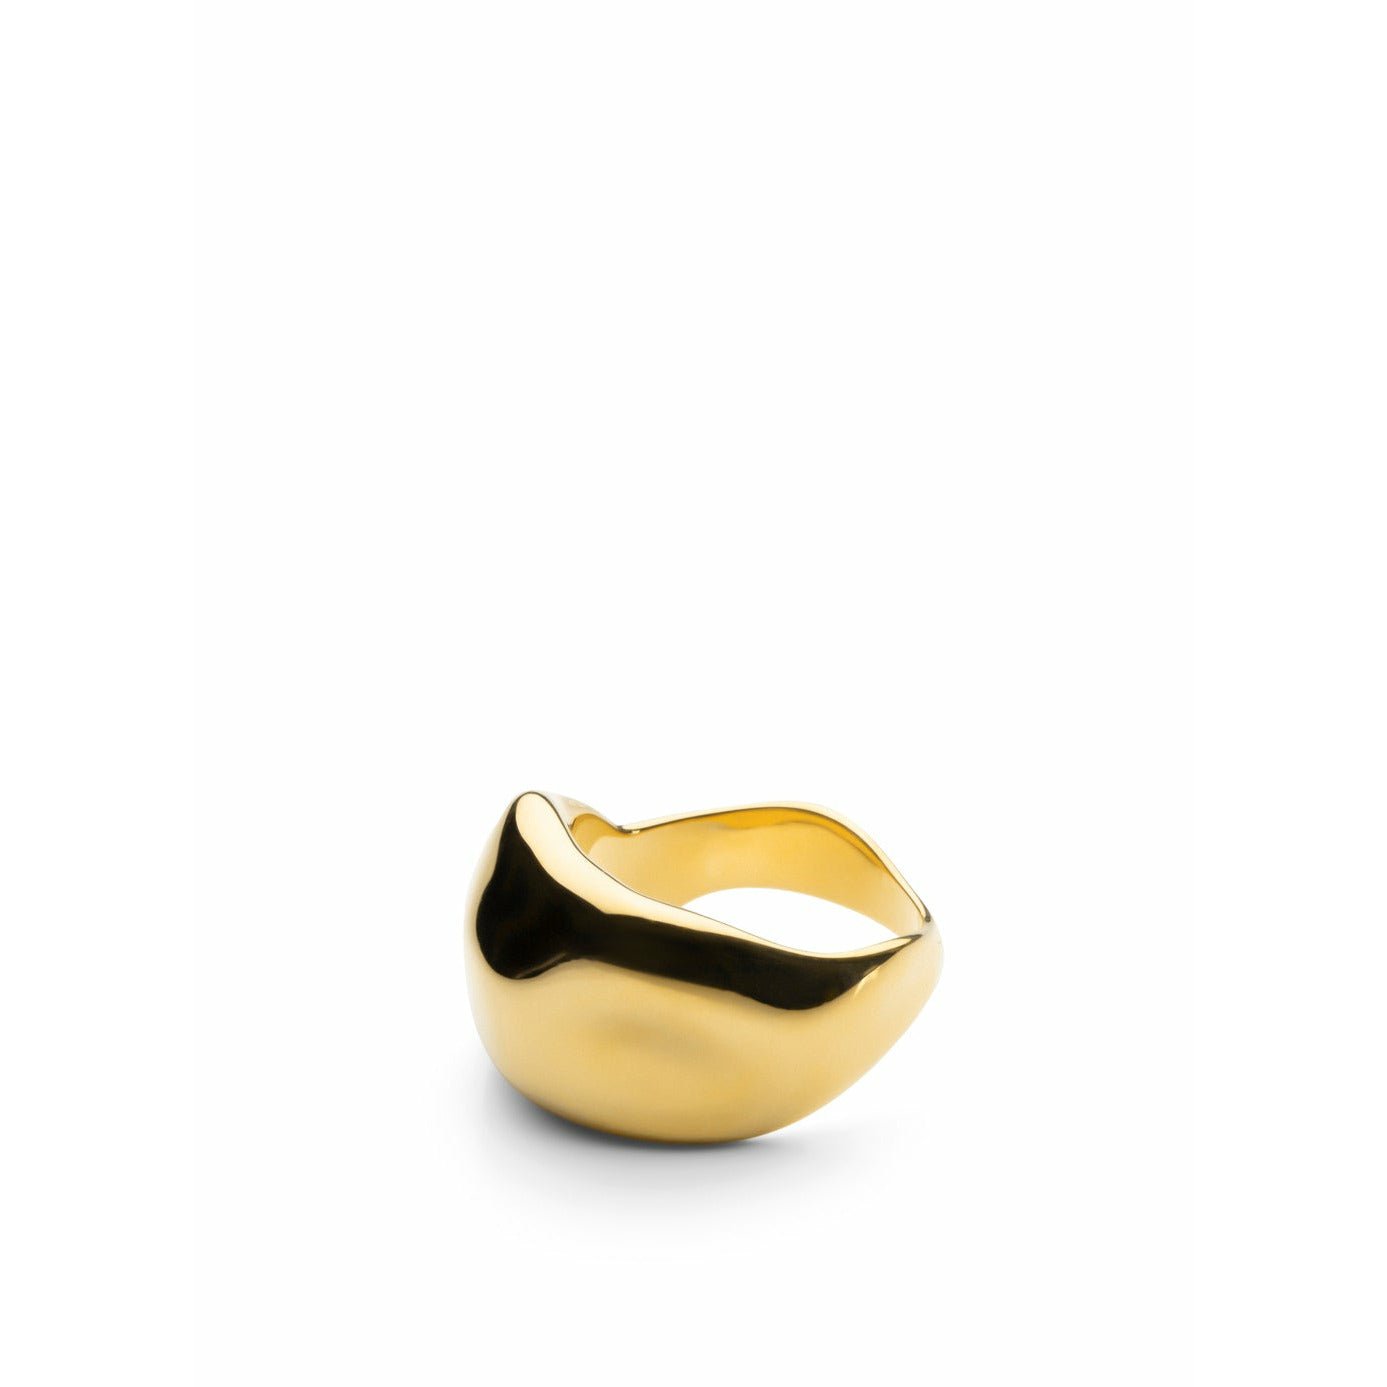 Skultuna Dikke ring groot goud vergulde, Ø1,97 cm